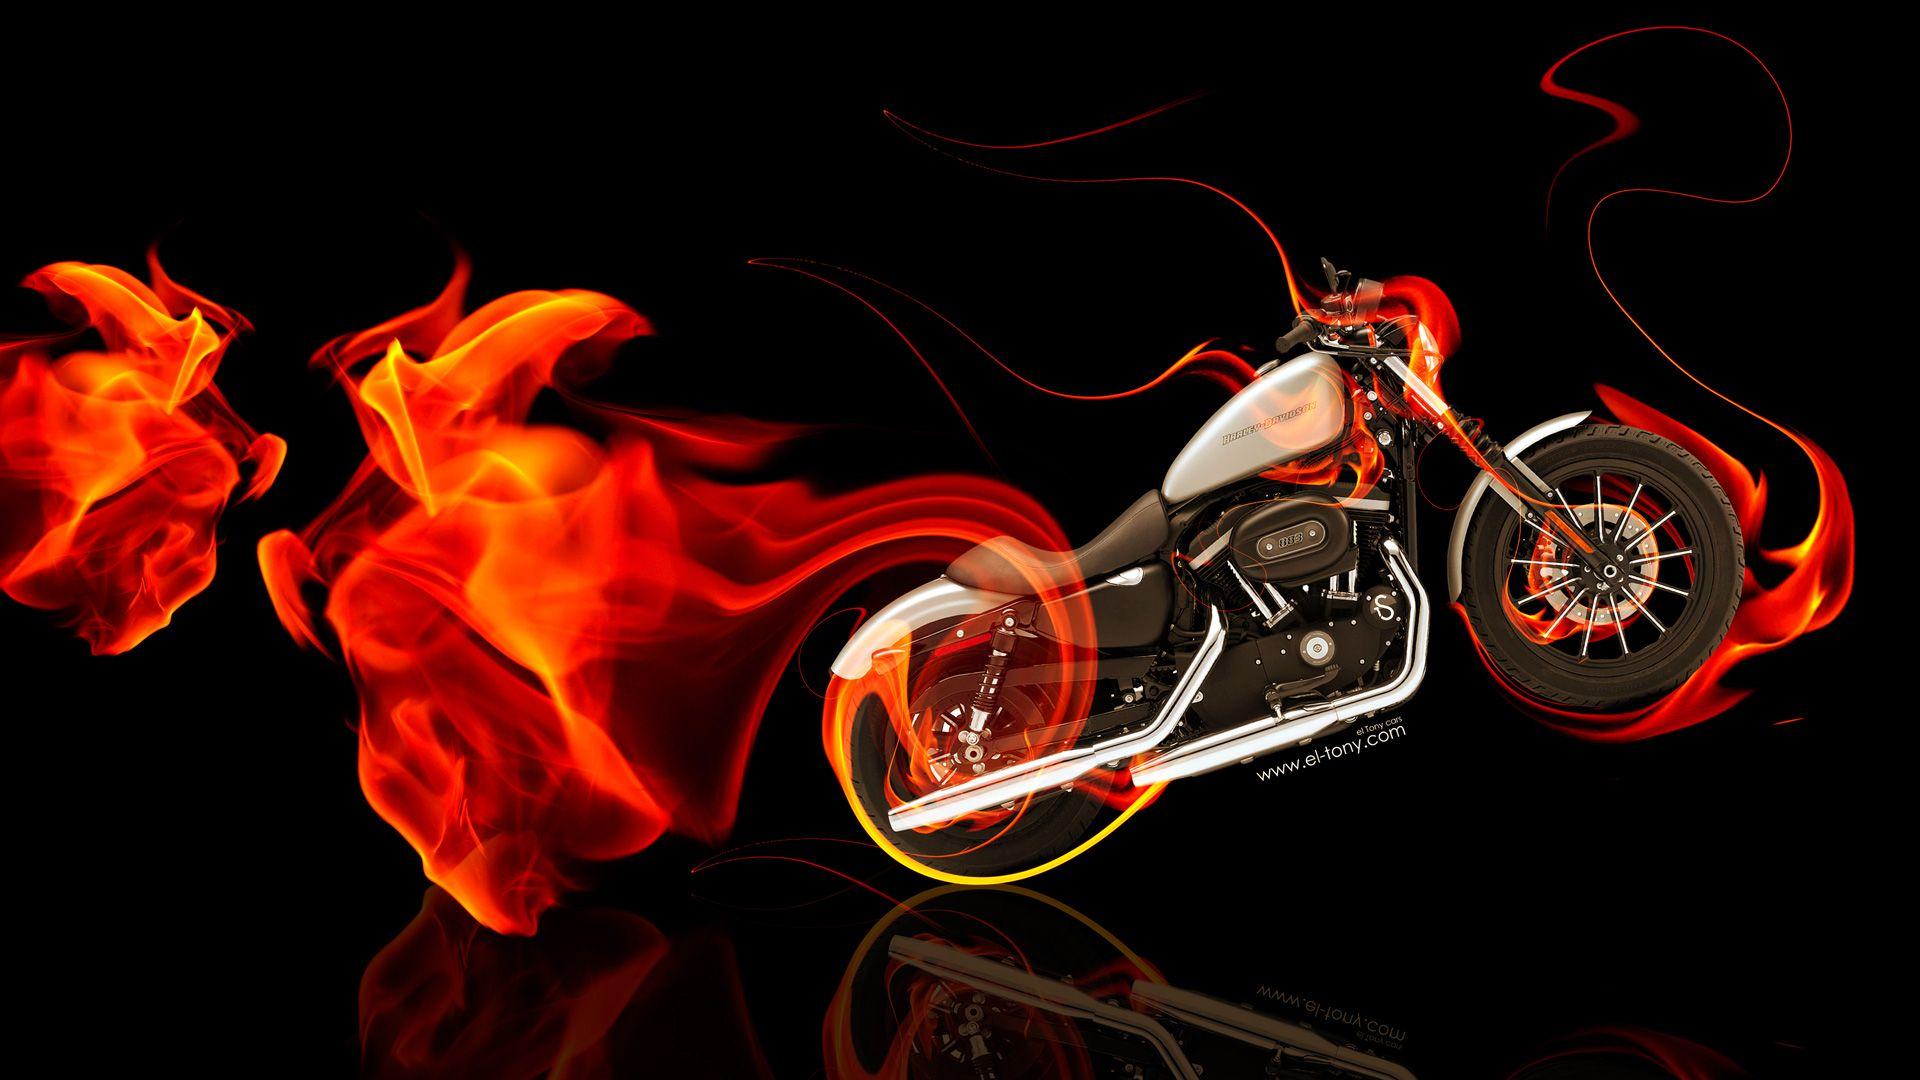 Harley Davidson Super Fire Bike 2014